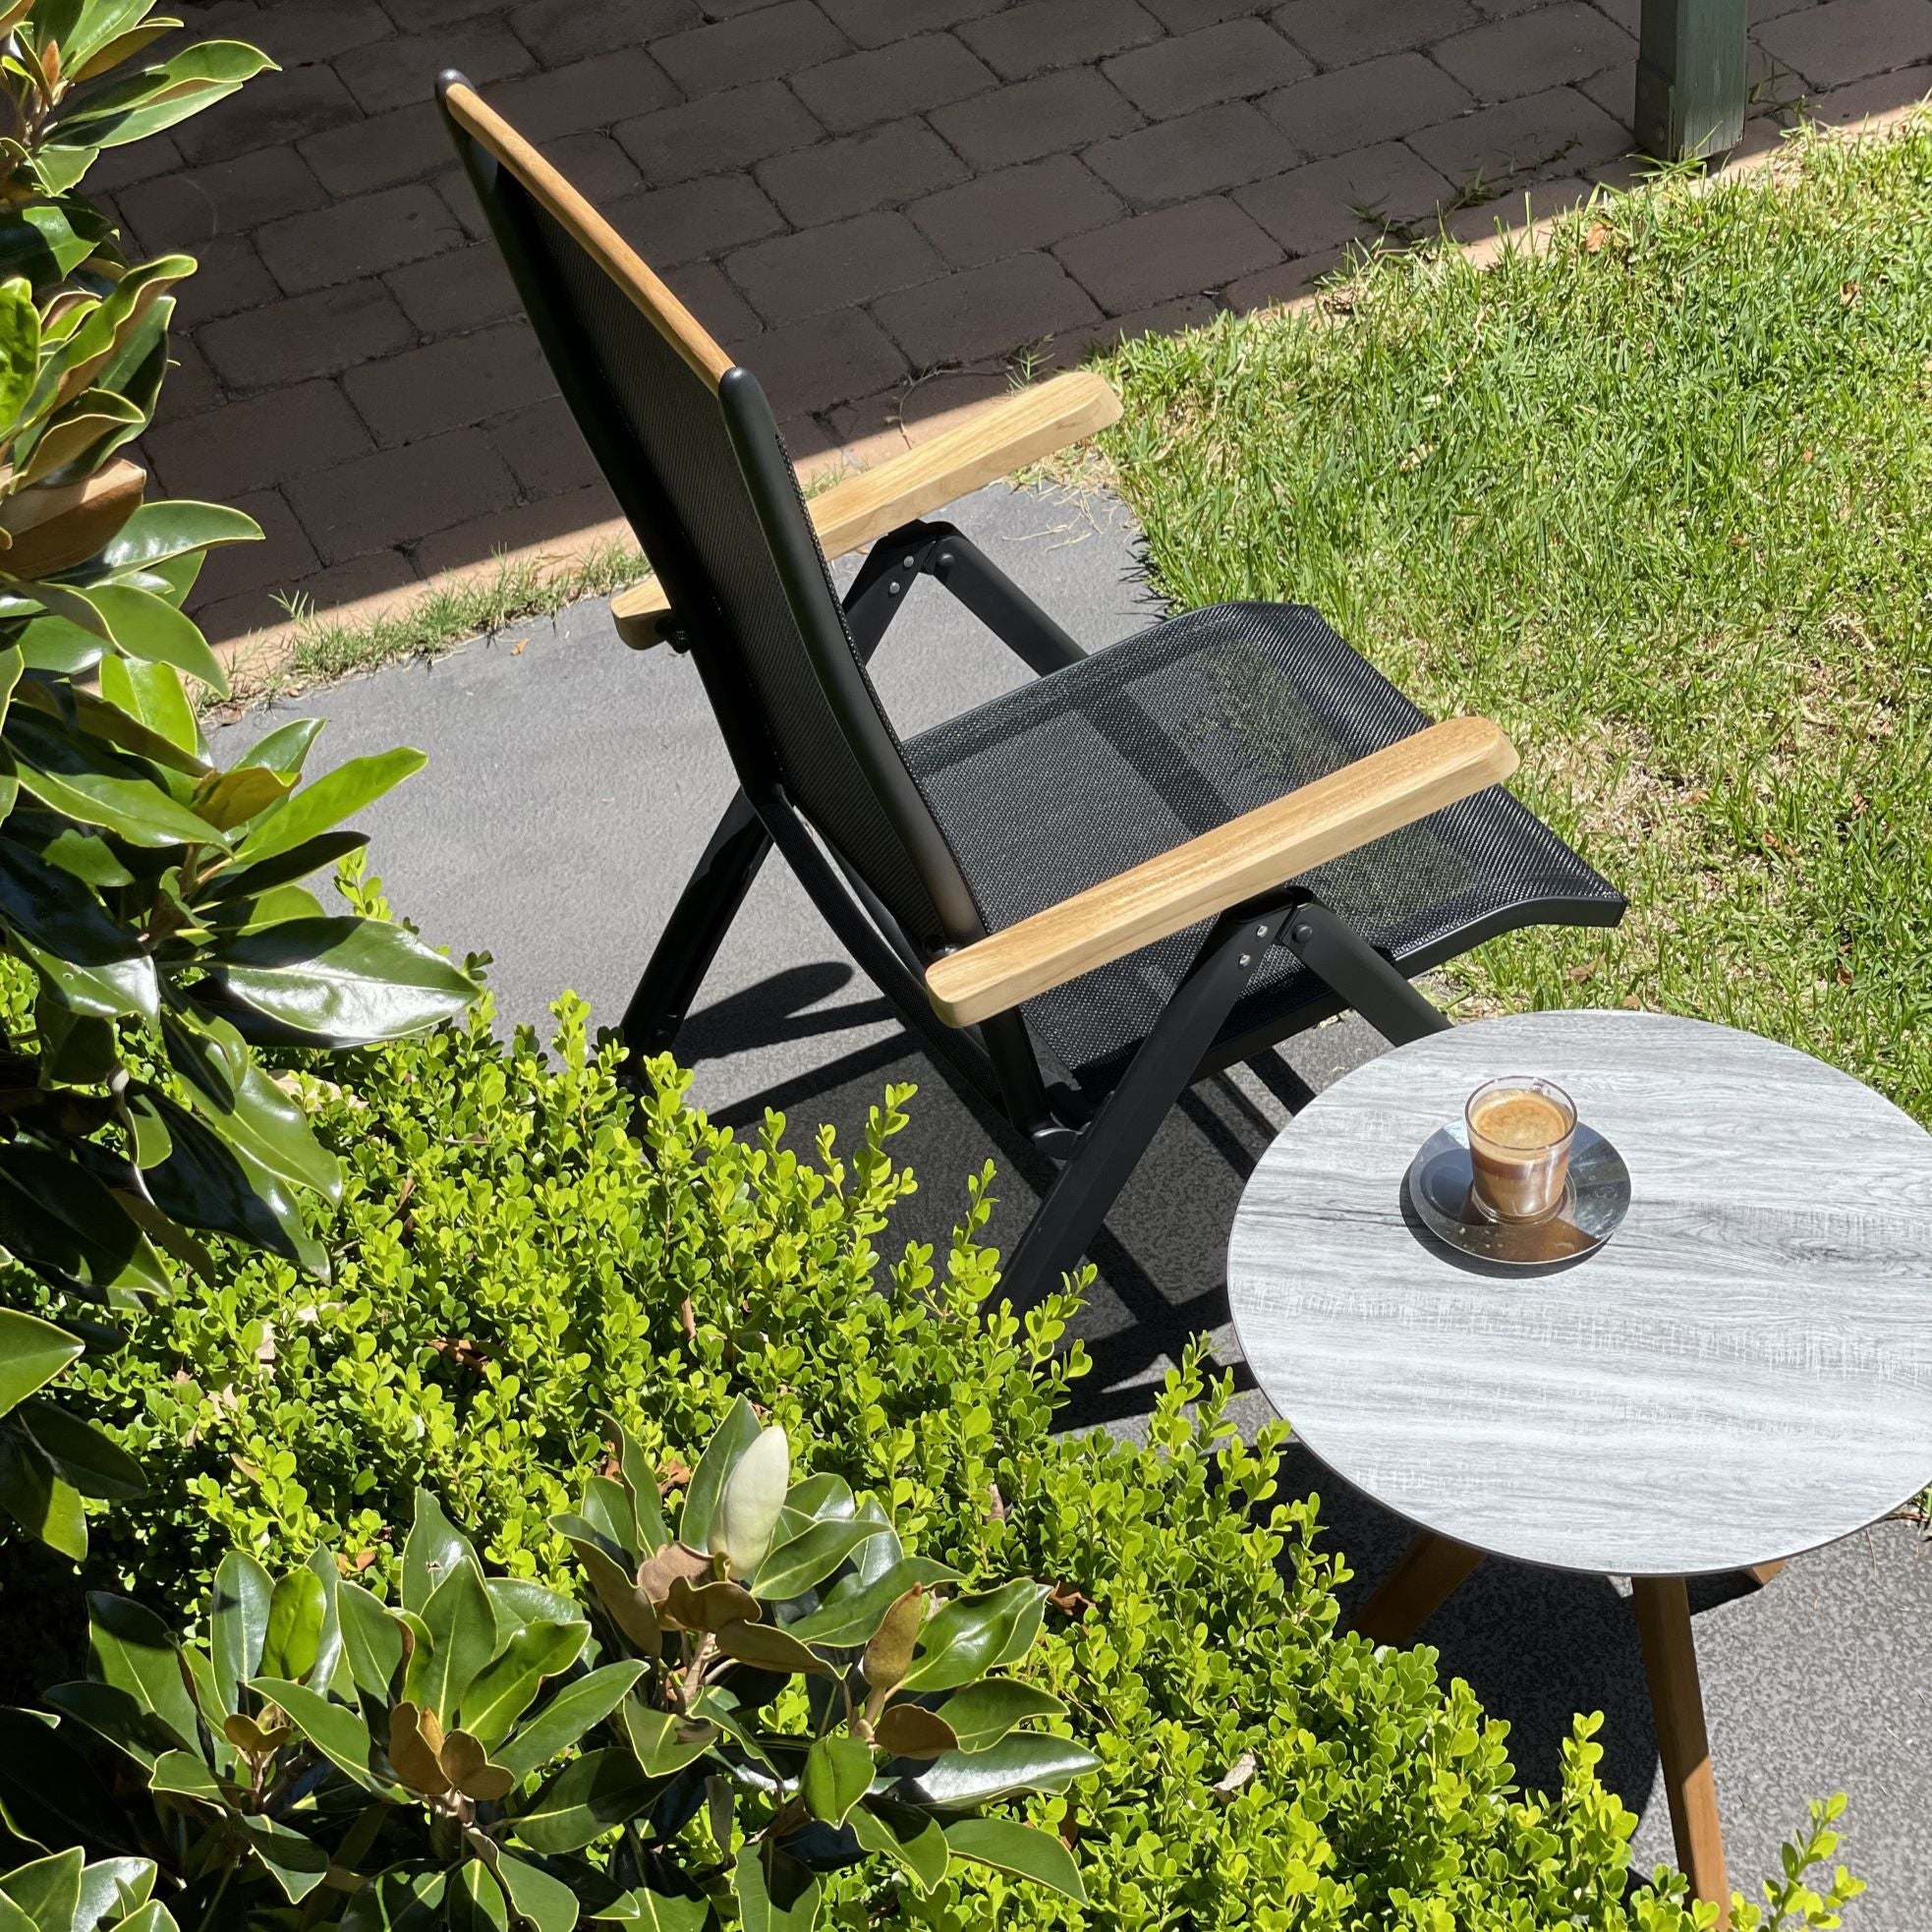 Wilton Outdoor Positional Chair